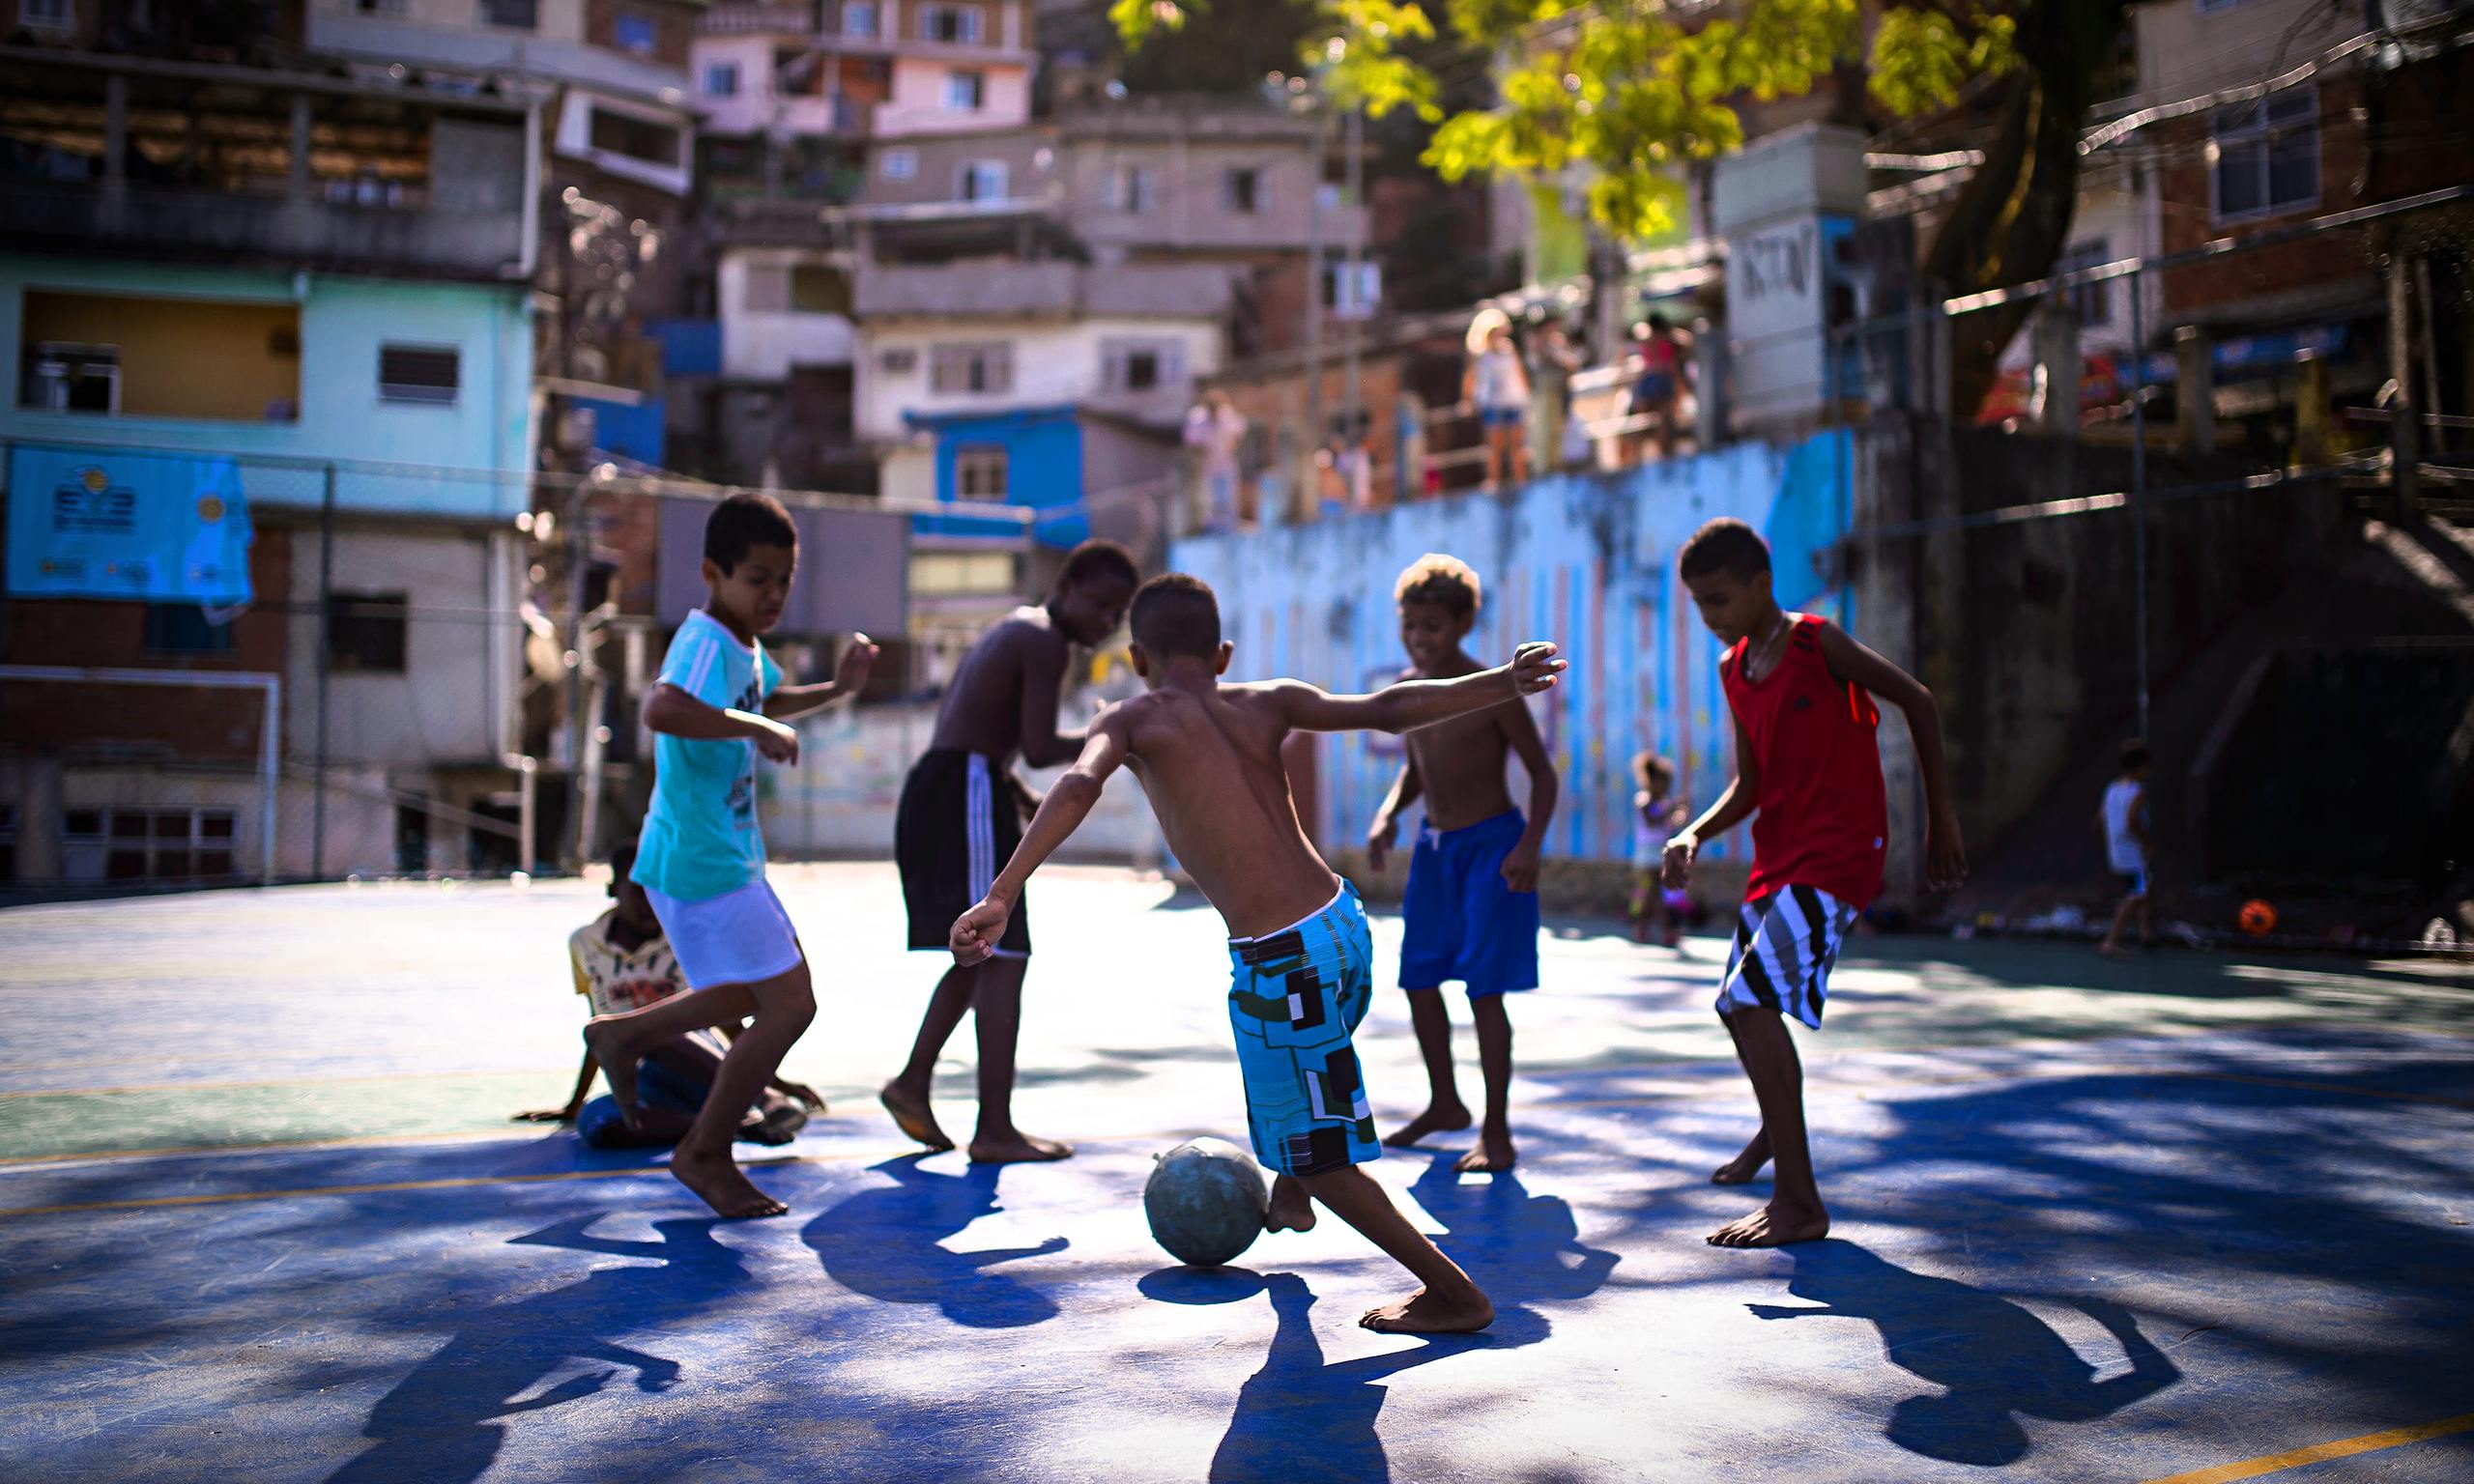 The Brazil favela staging its own World Cup - Soccer news - NewsLocker2560 x 1536